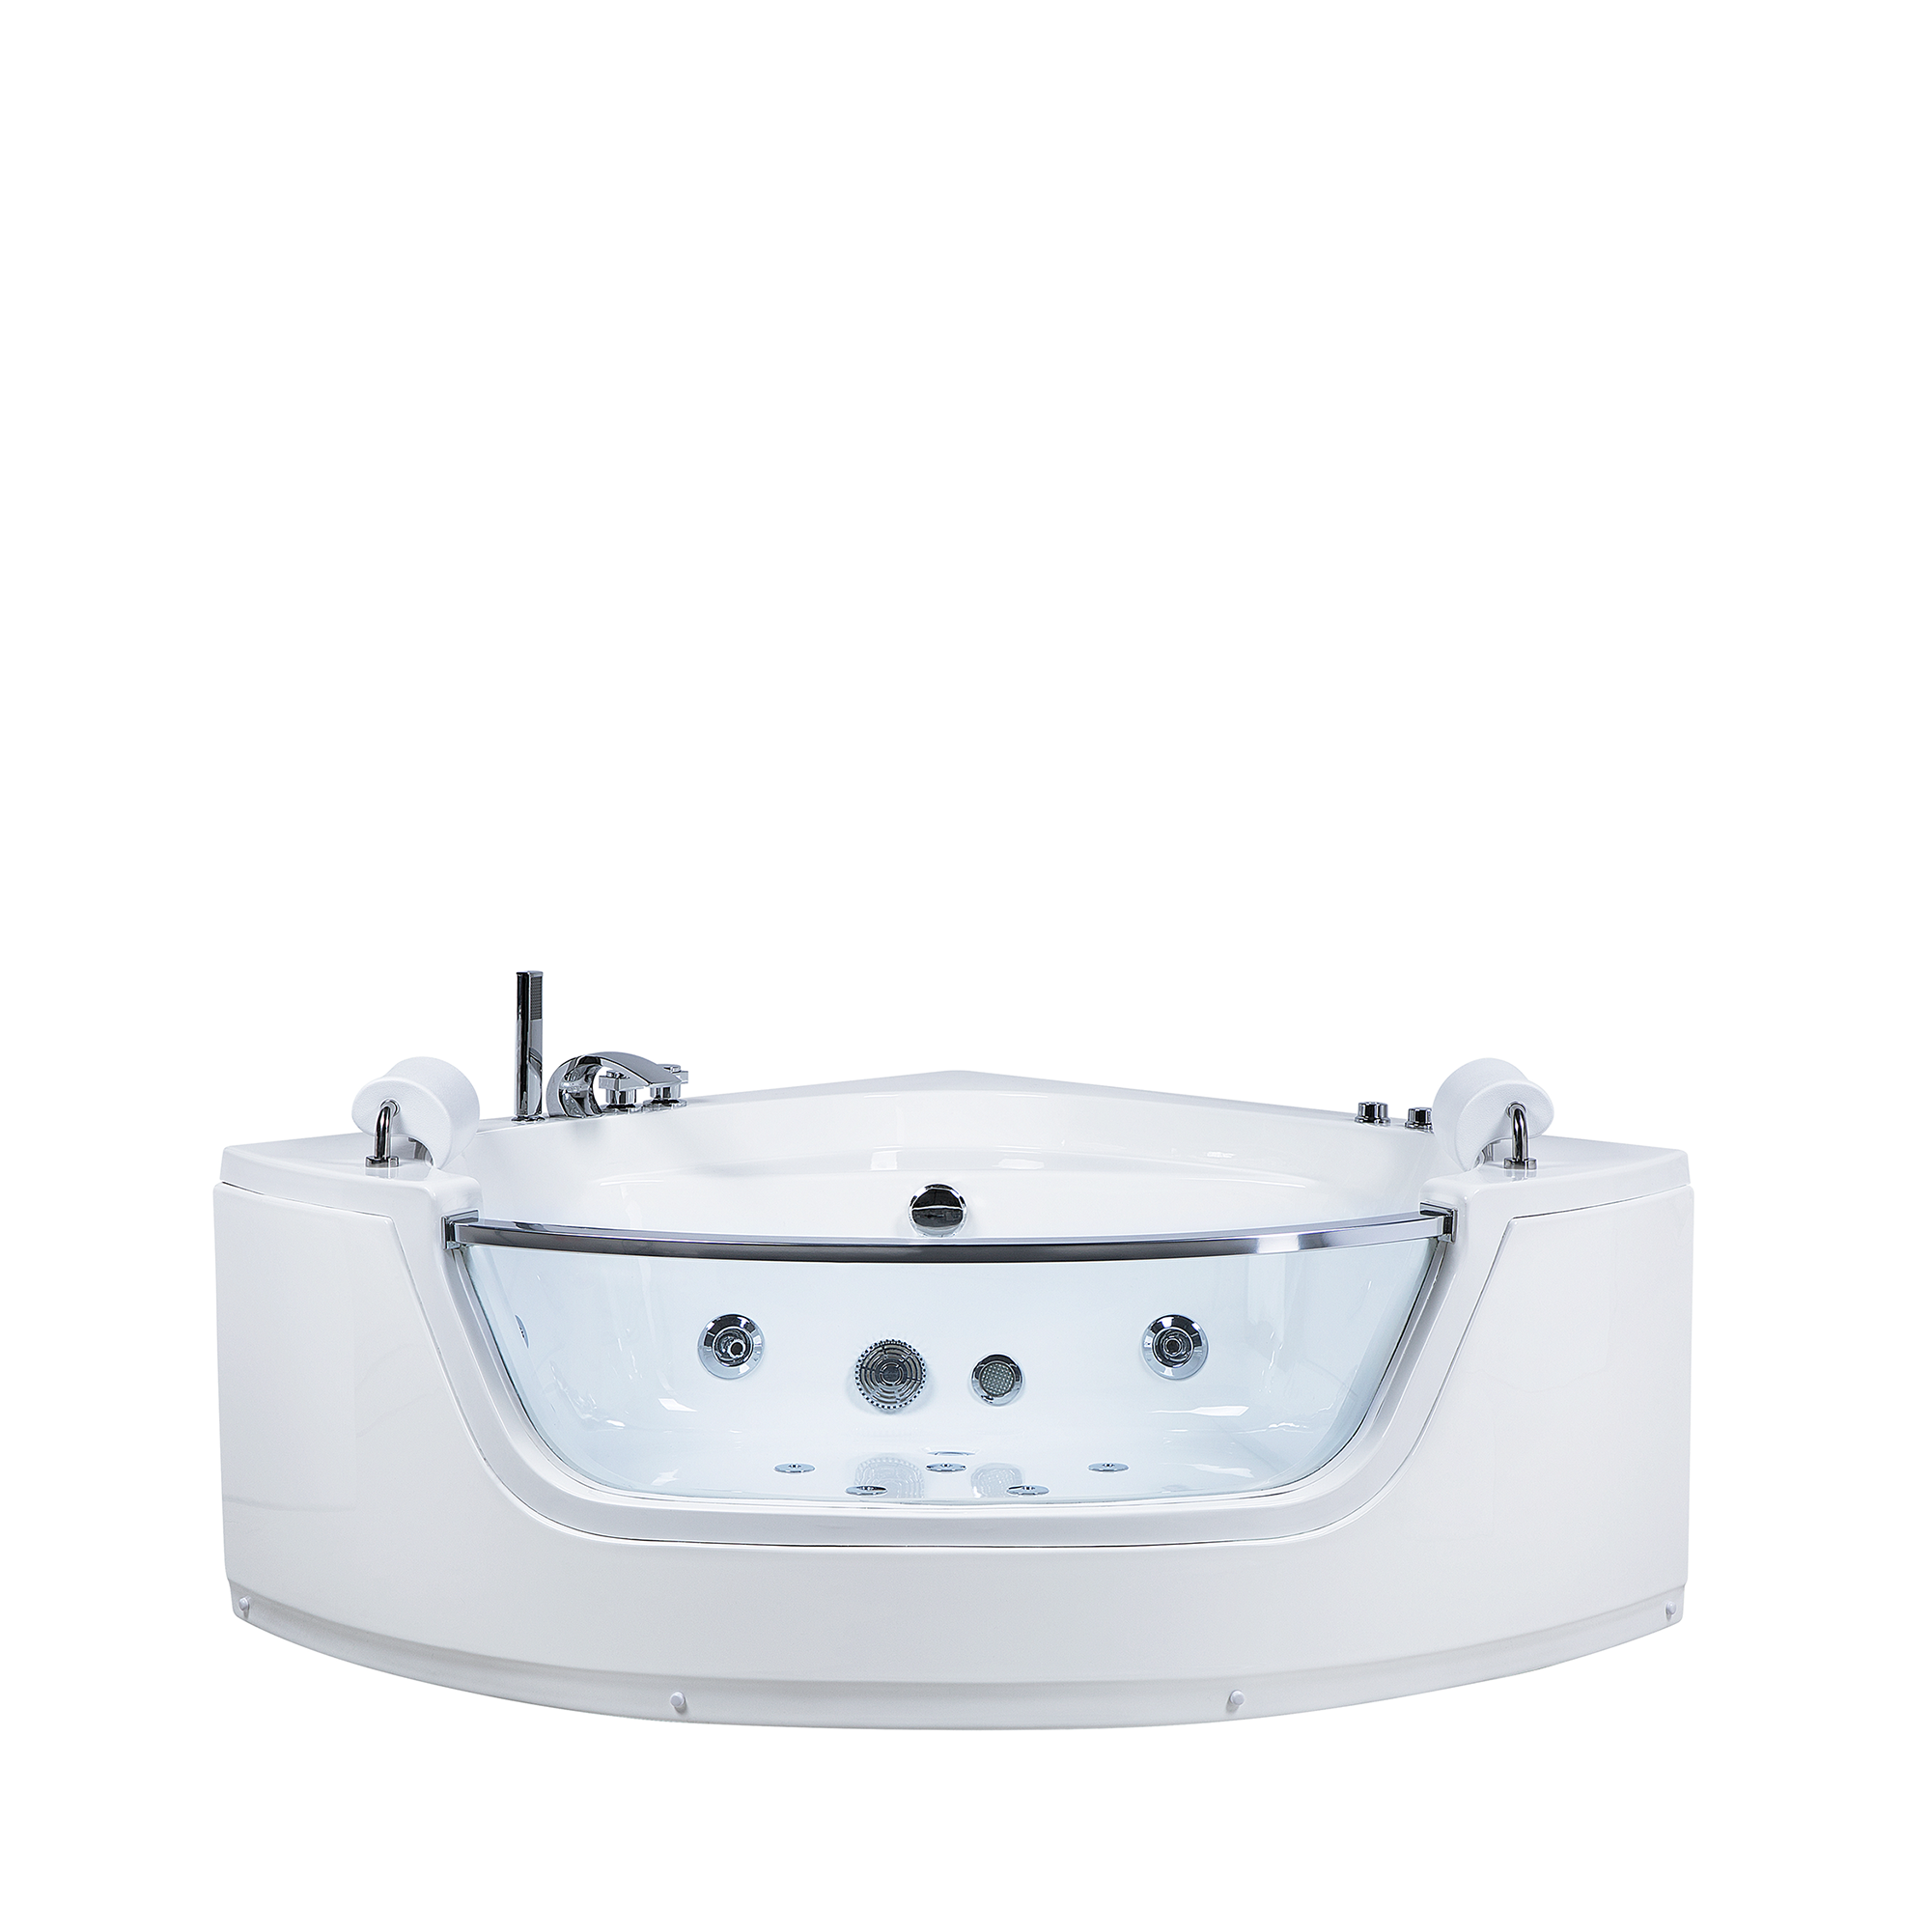 Beliani Corner Whirlpool Bath White Sanitary Acrylic with LED Massage Jets 192 x 136 cm Modern Design